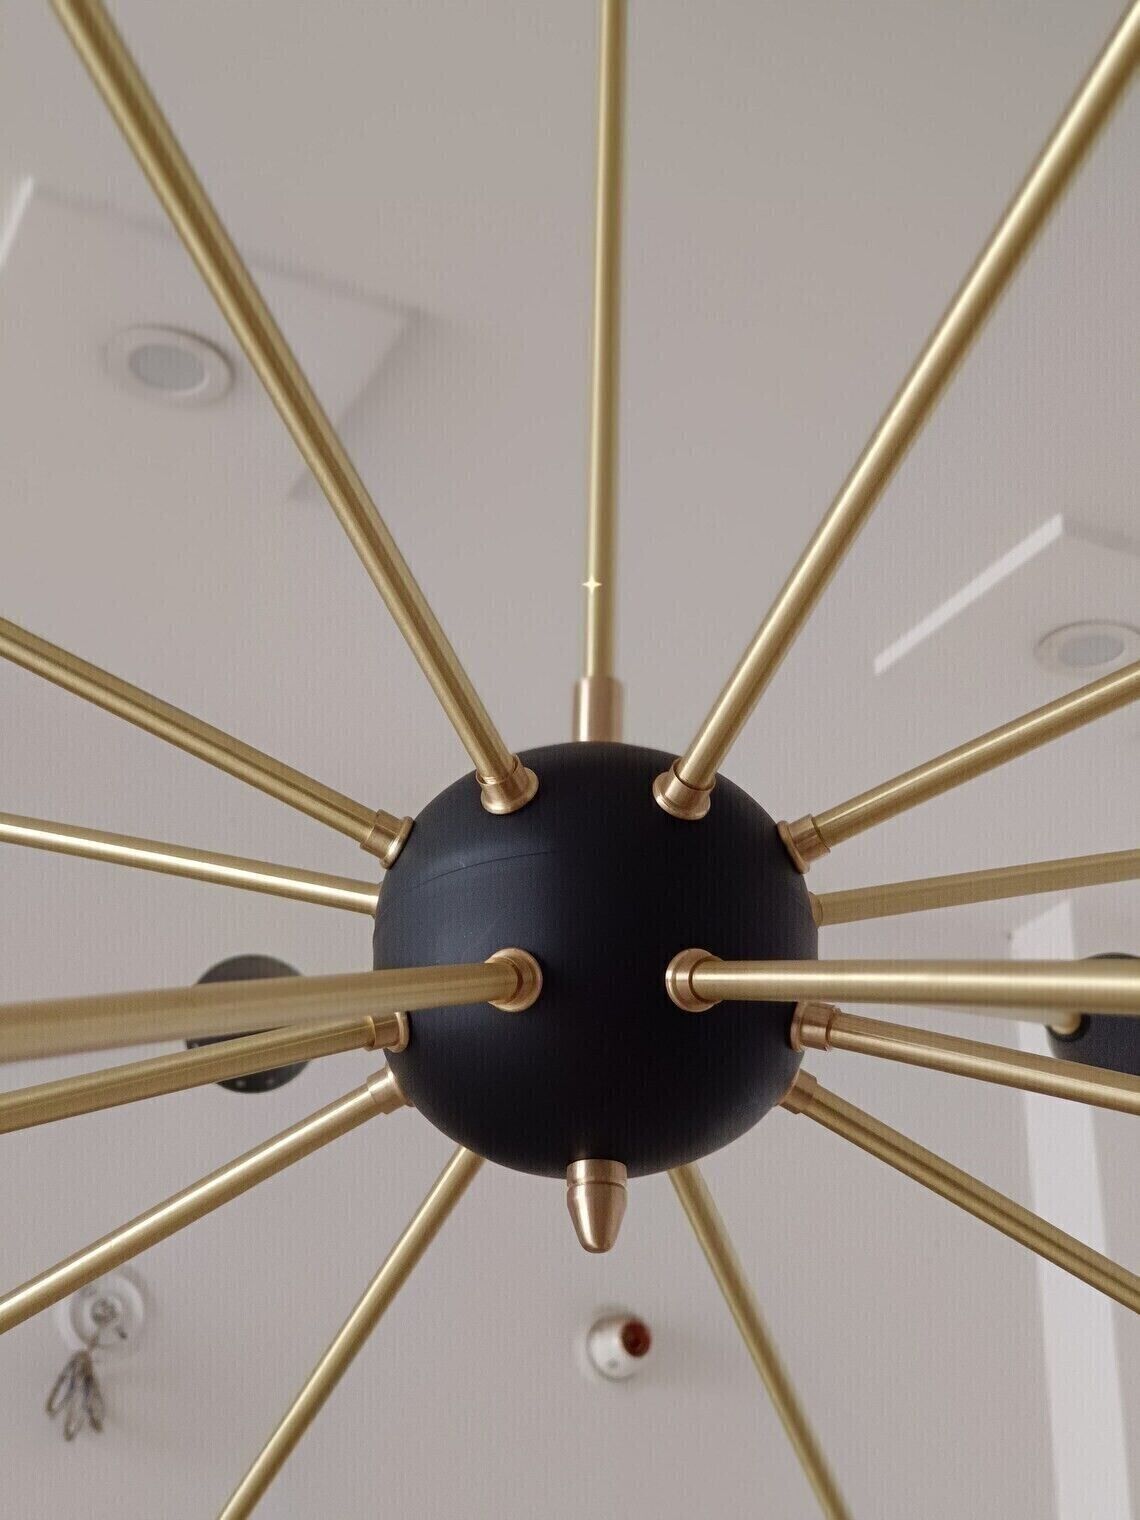 16 Arm Brass Sputnik Chandelier Light | Mid Century Italian Stilnovo Style